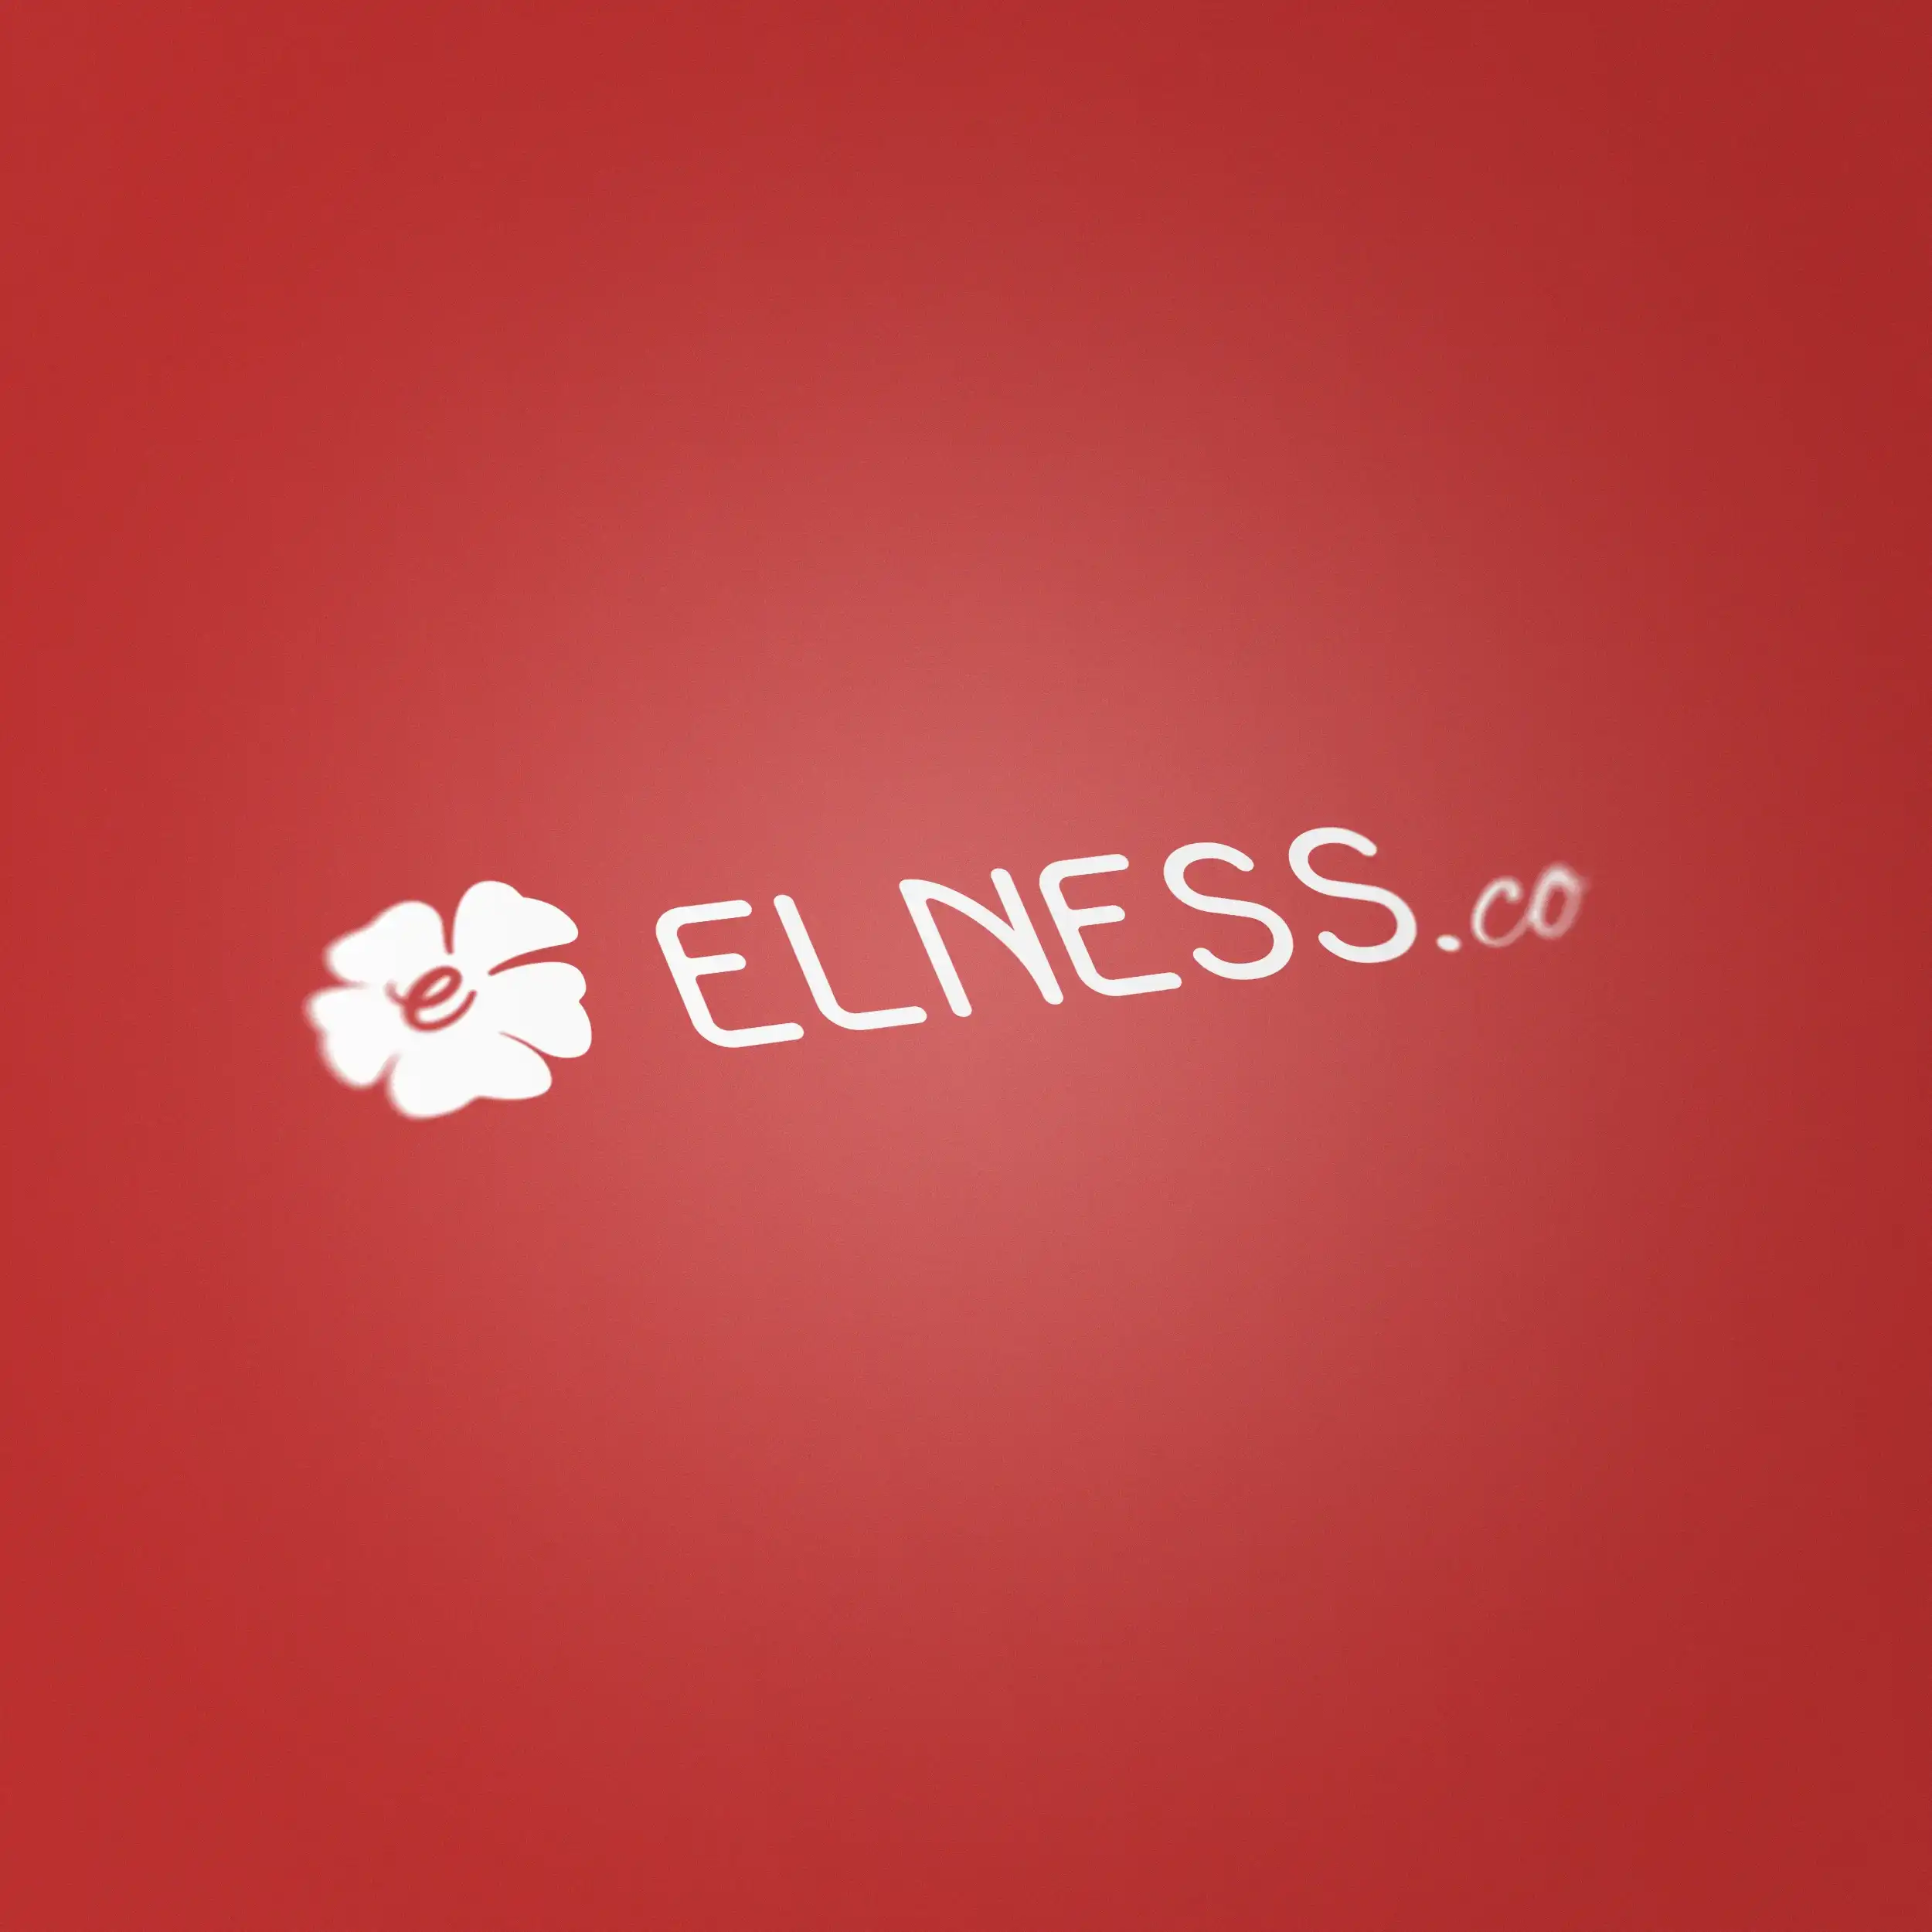 projet : Elness